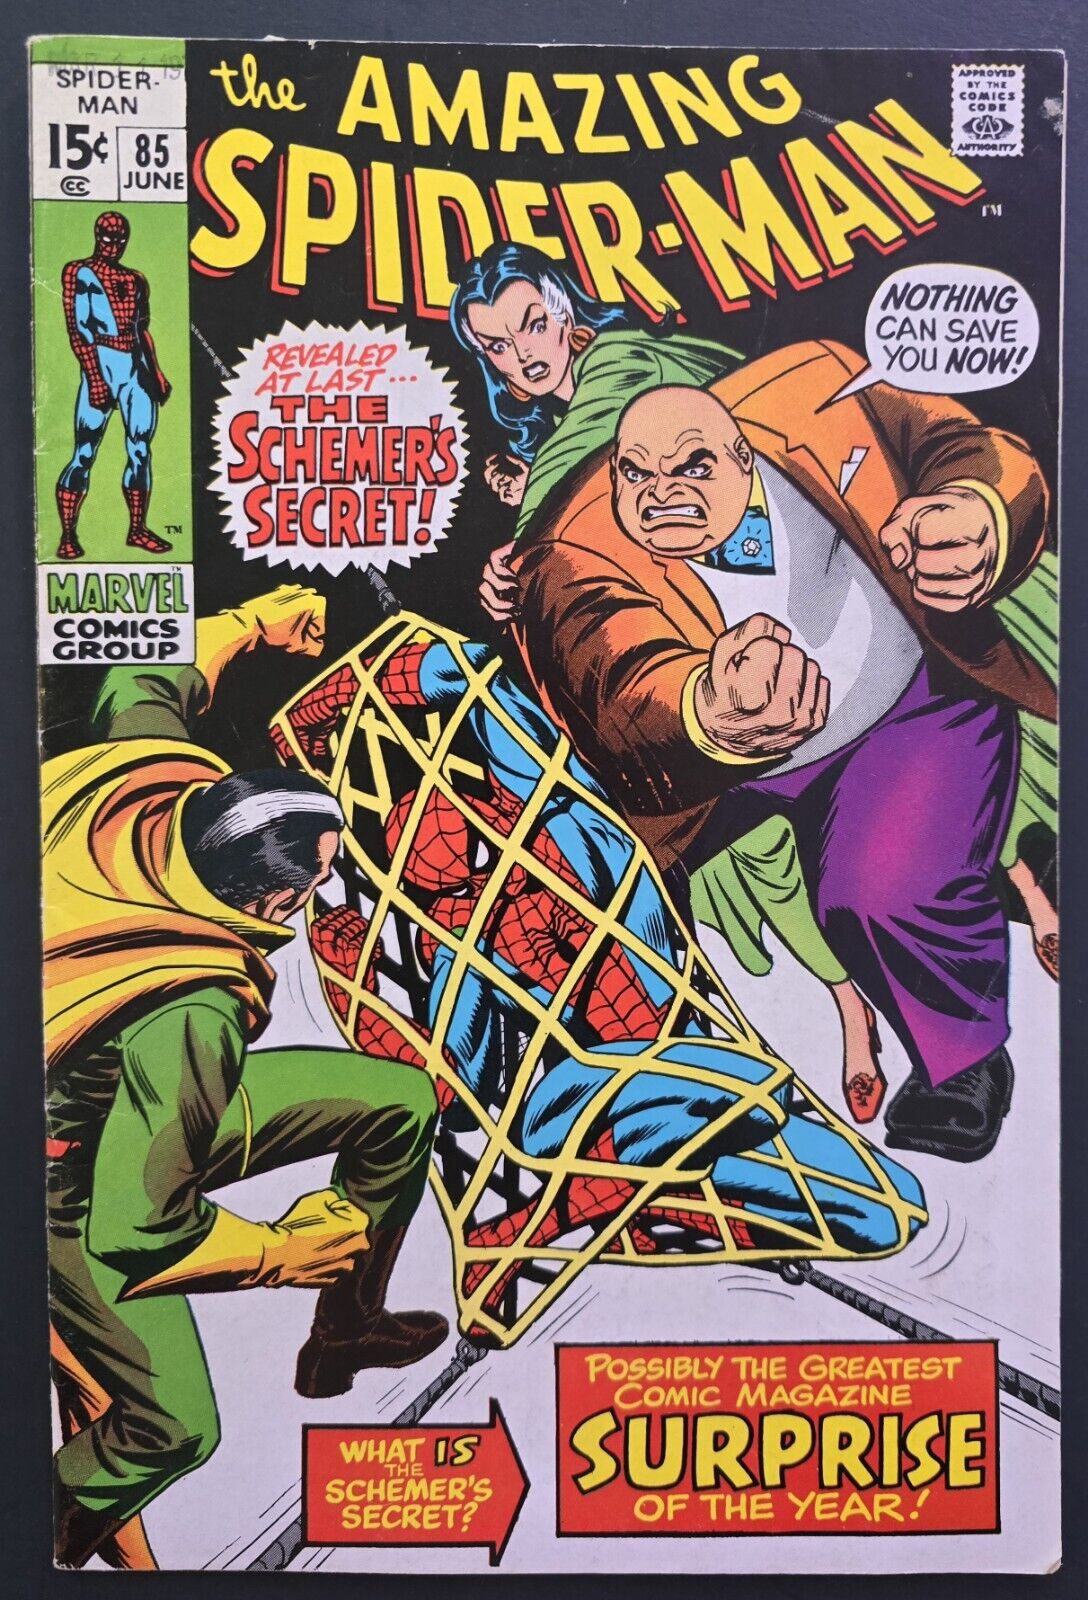 THE AMAZING SPIDER-MAN #85 COMIC BOOK (MARVEL, 1970) BRONZE AGE +